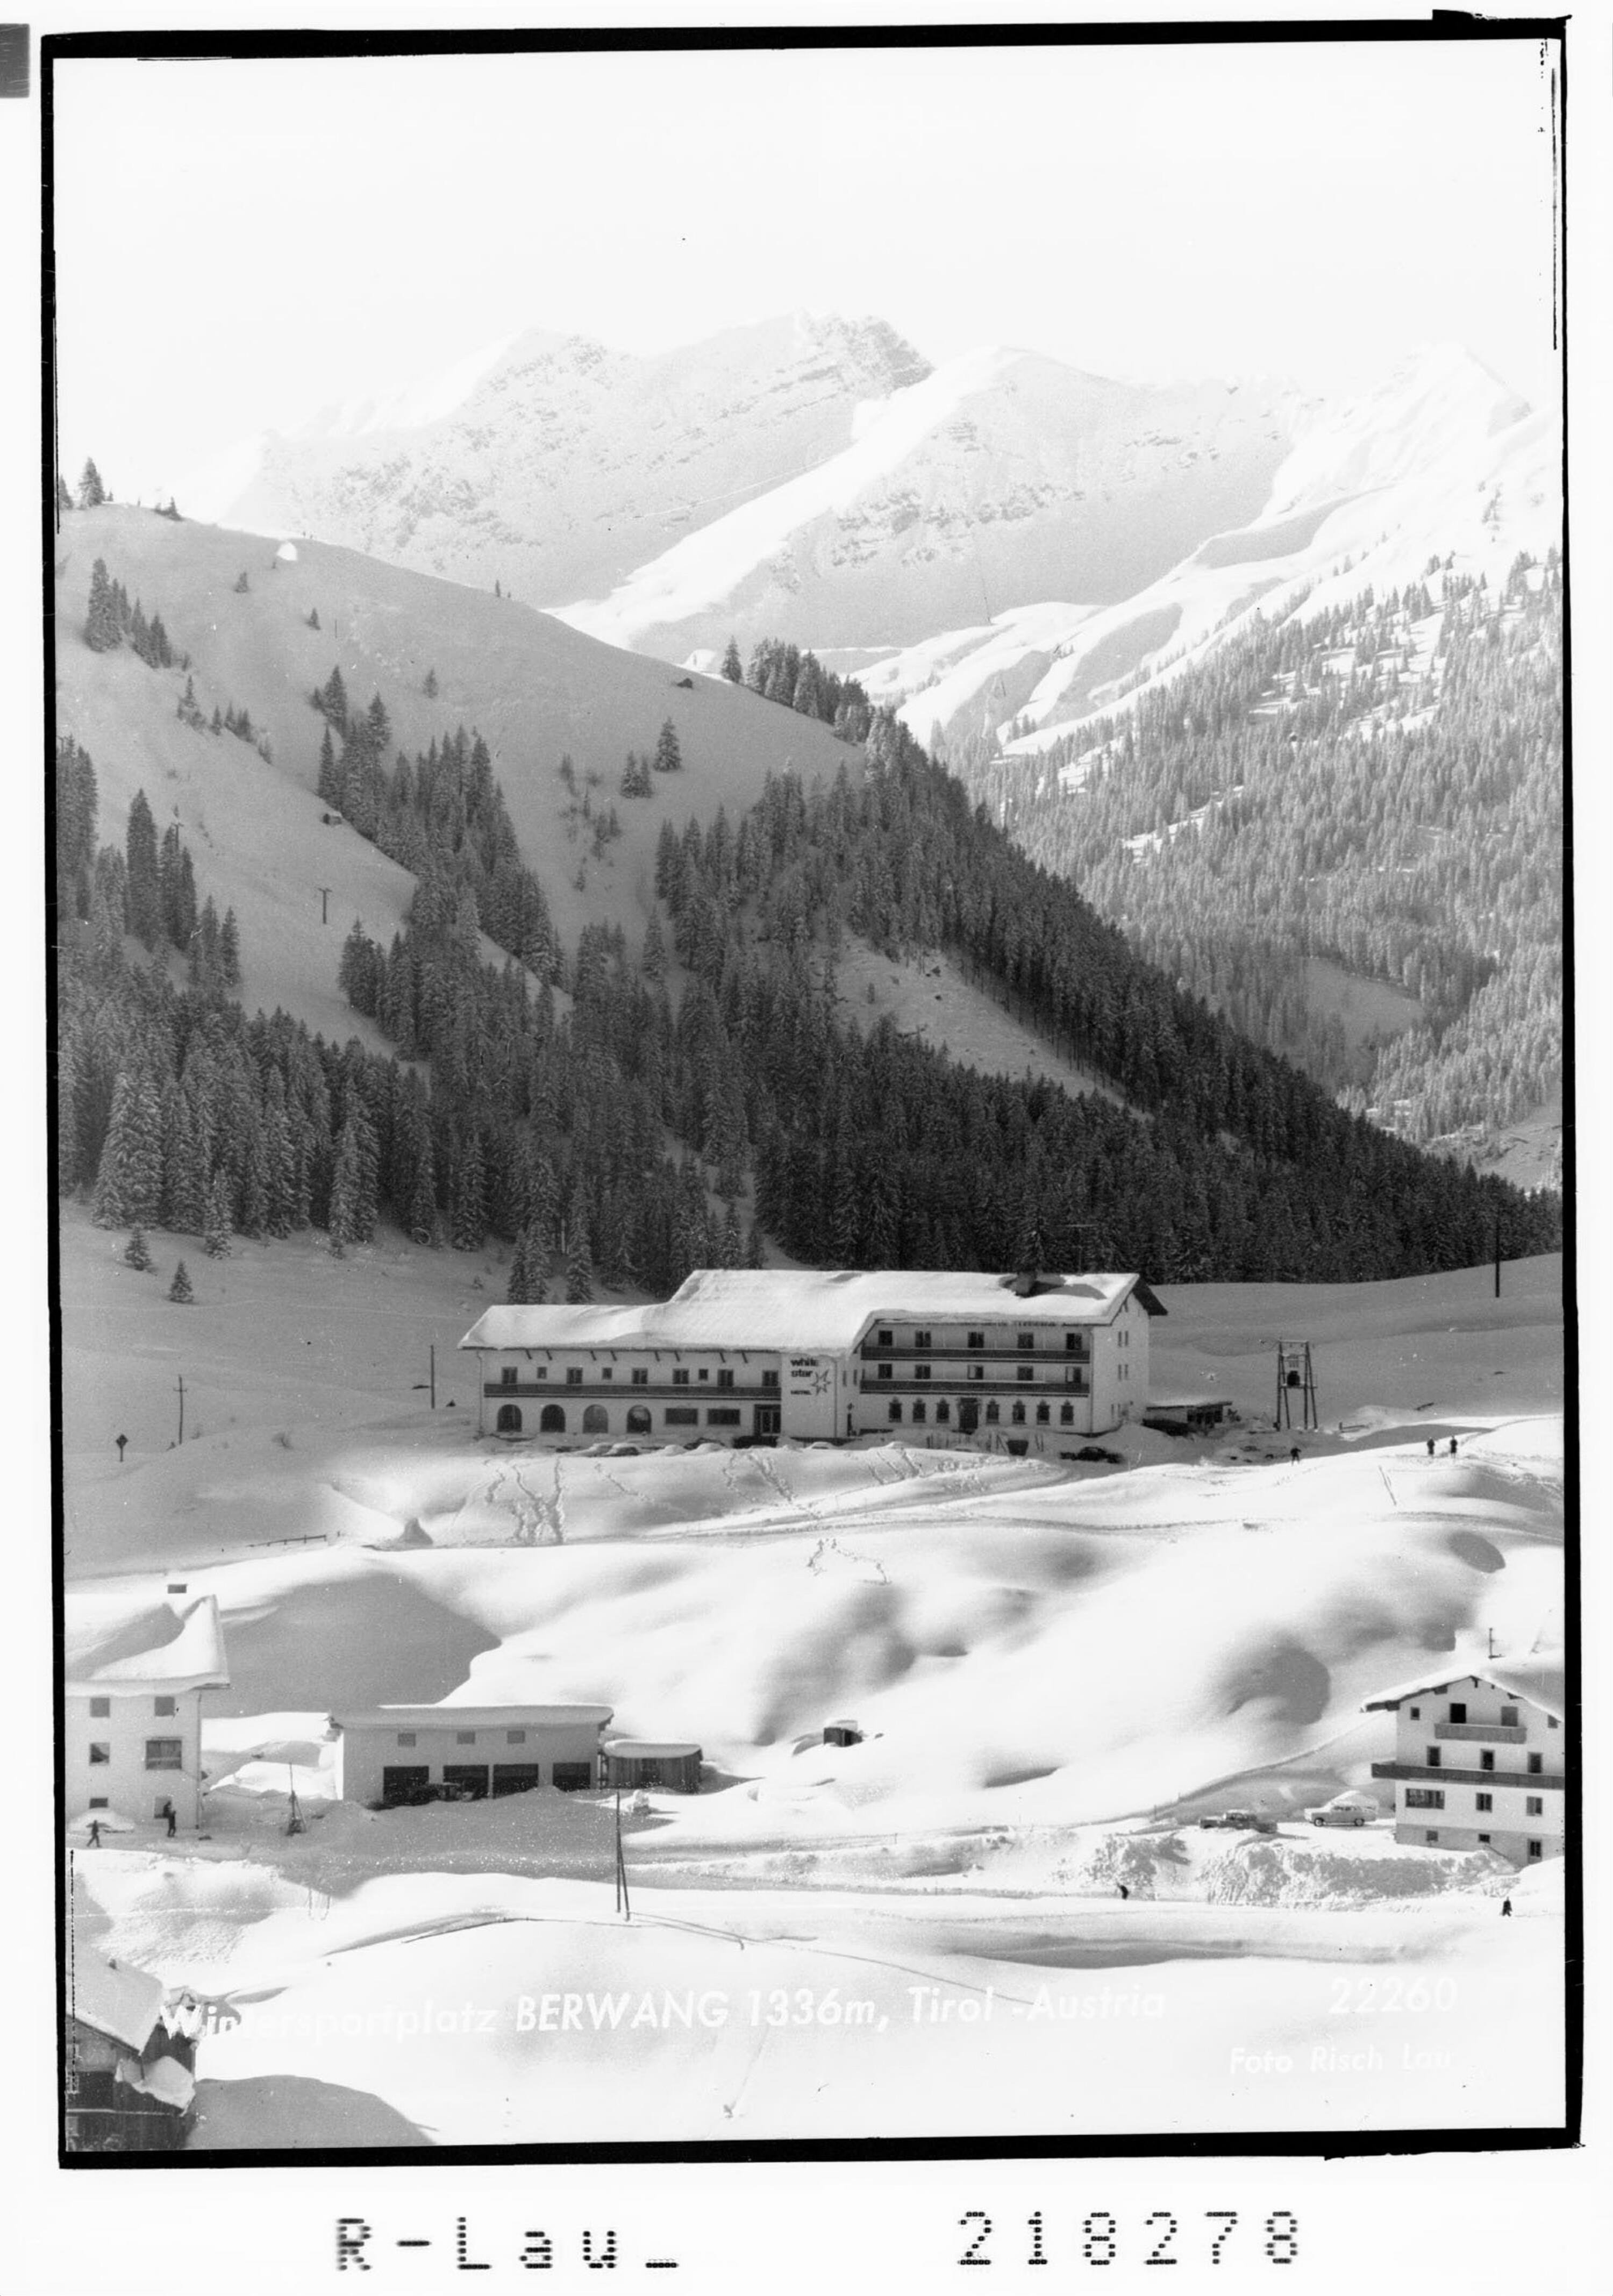 Wintersportplatz Berwang 1336 m, Tirol - Austria></div>


    <hr>
    <div class=